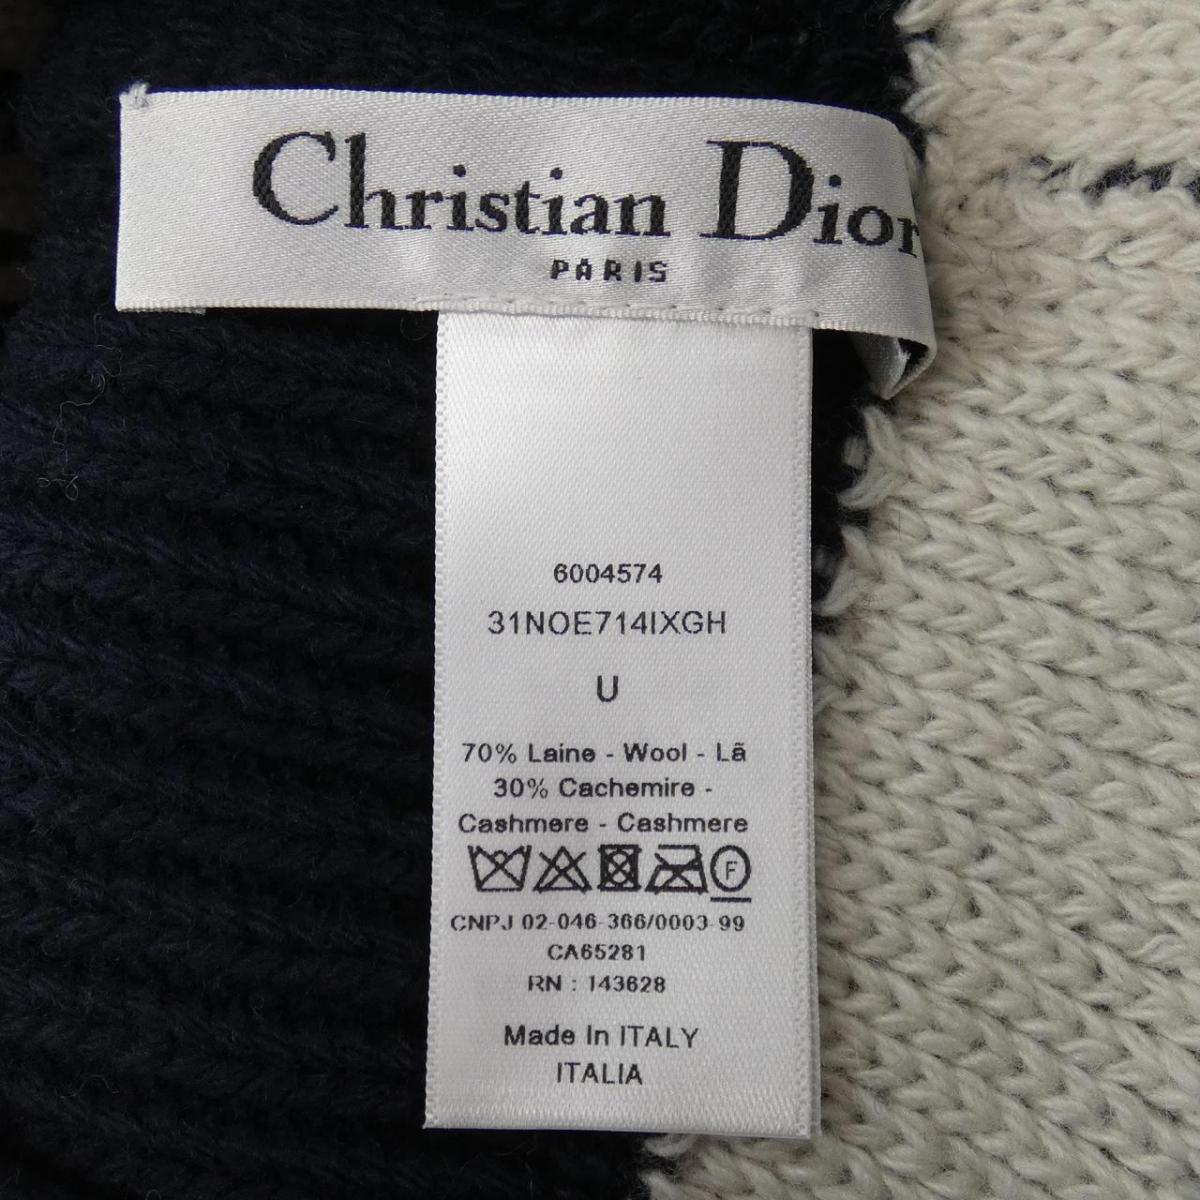 Christian Dior Hat